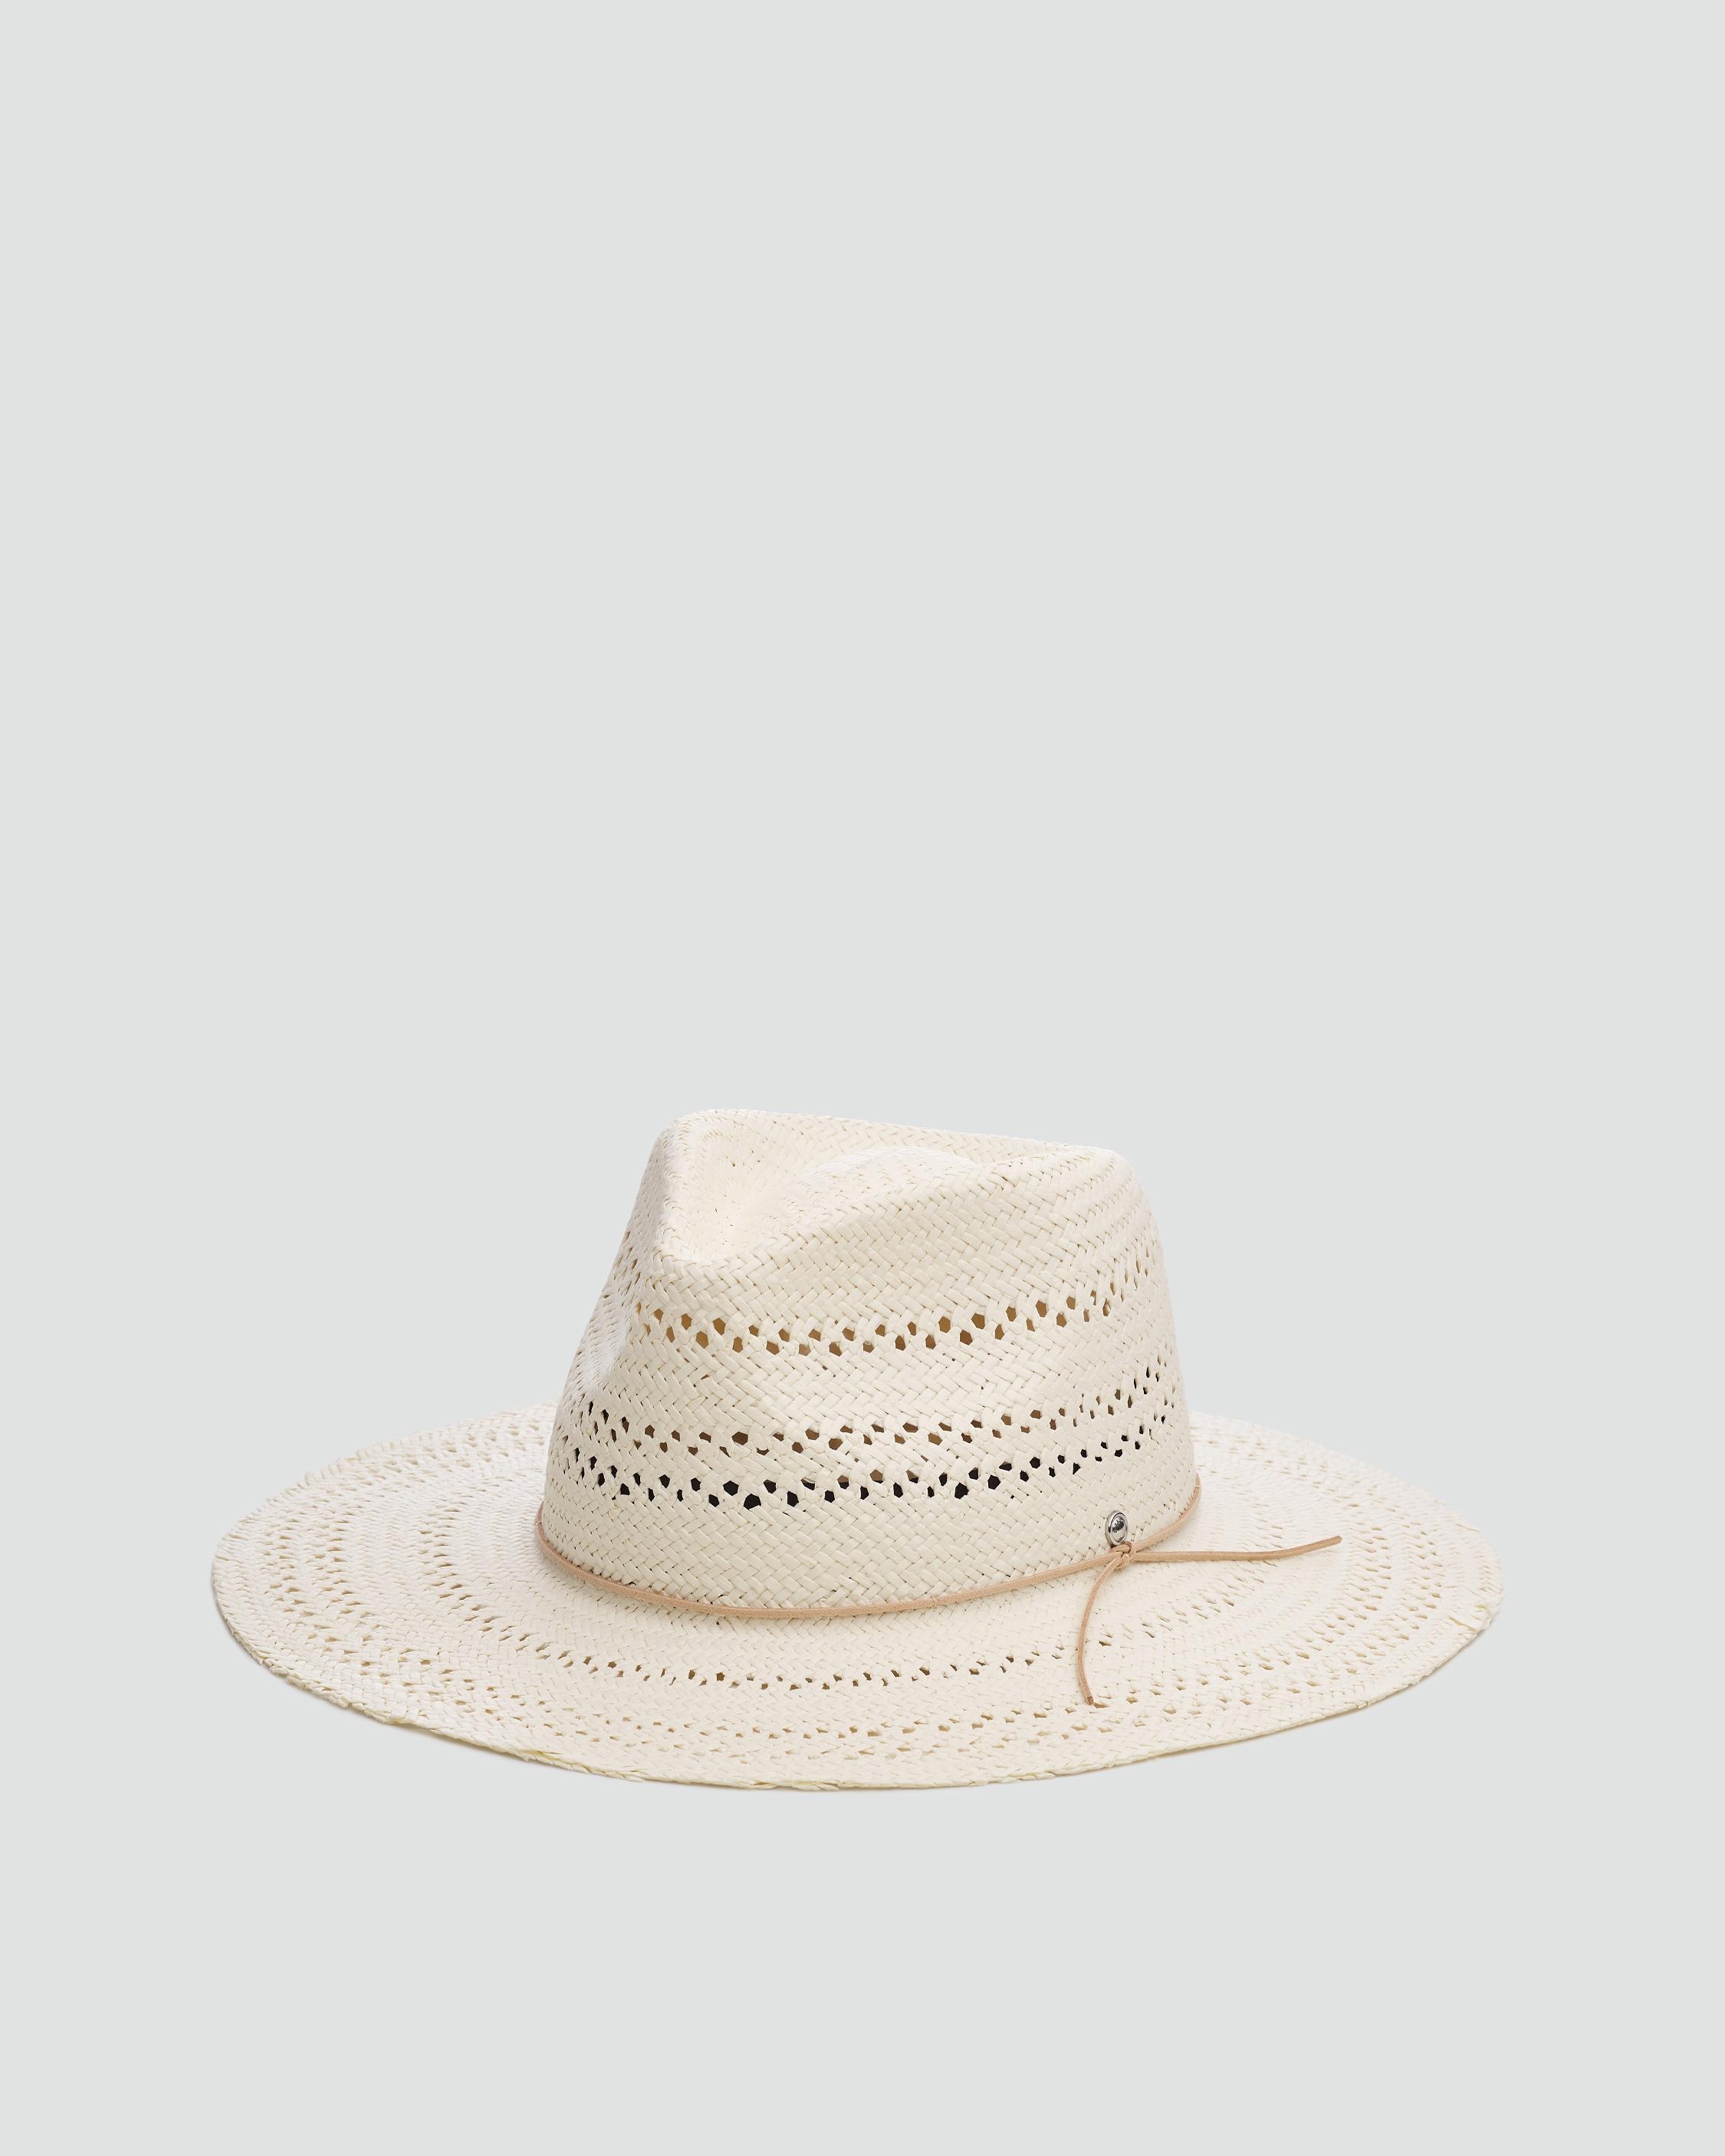 Elle Perf Fedora
Straw Hat - 1